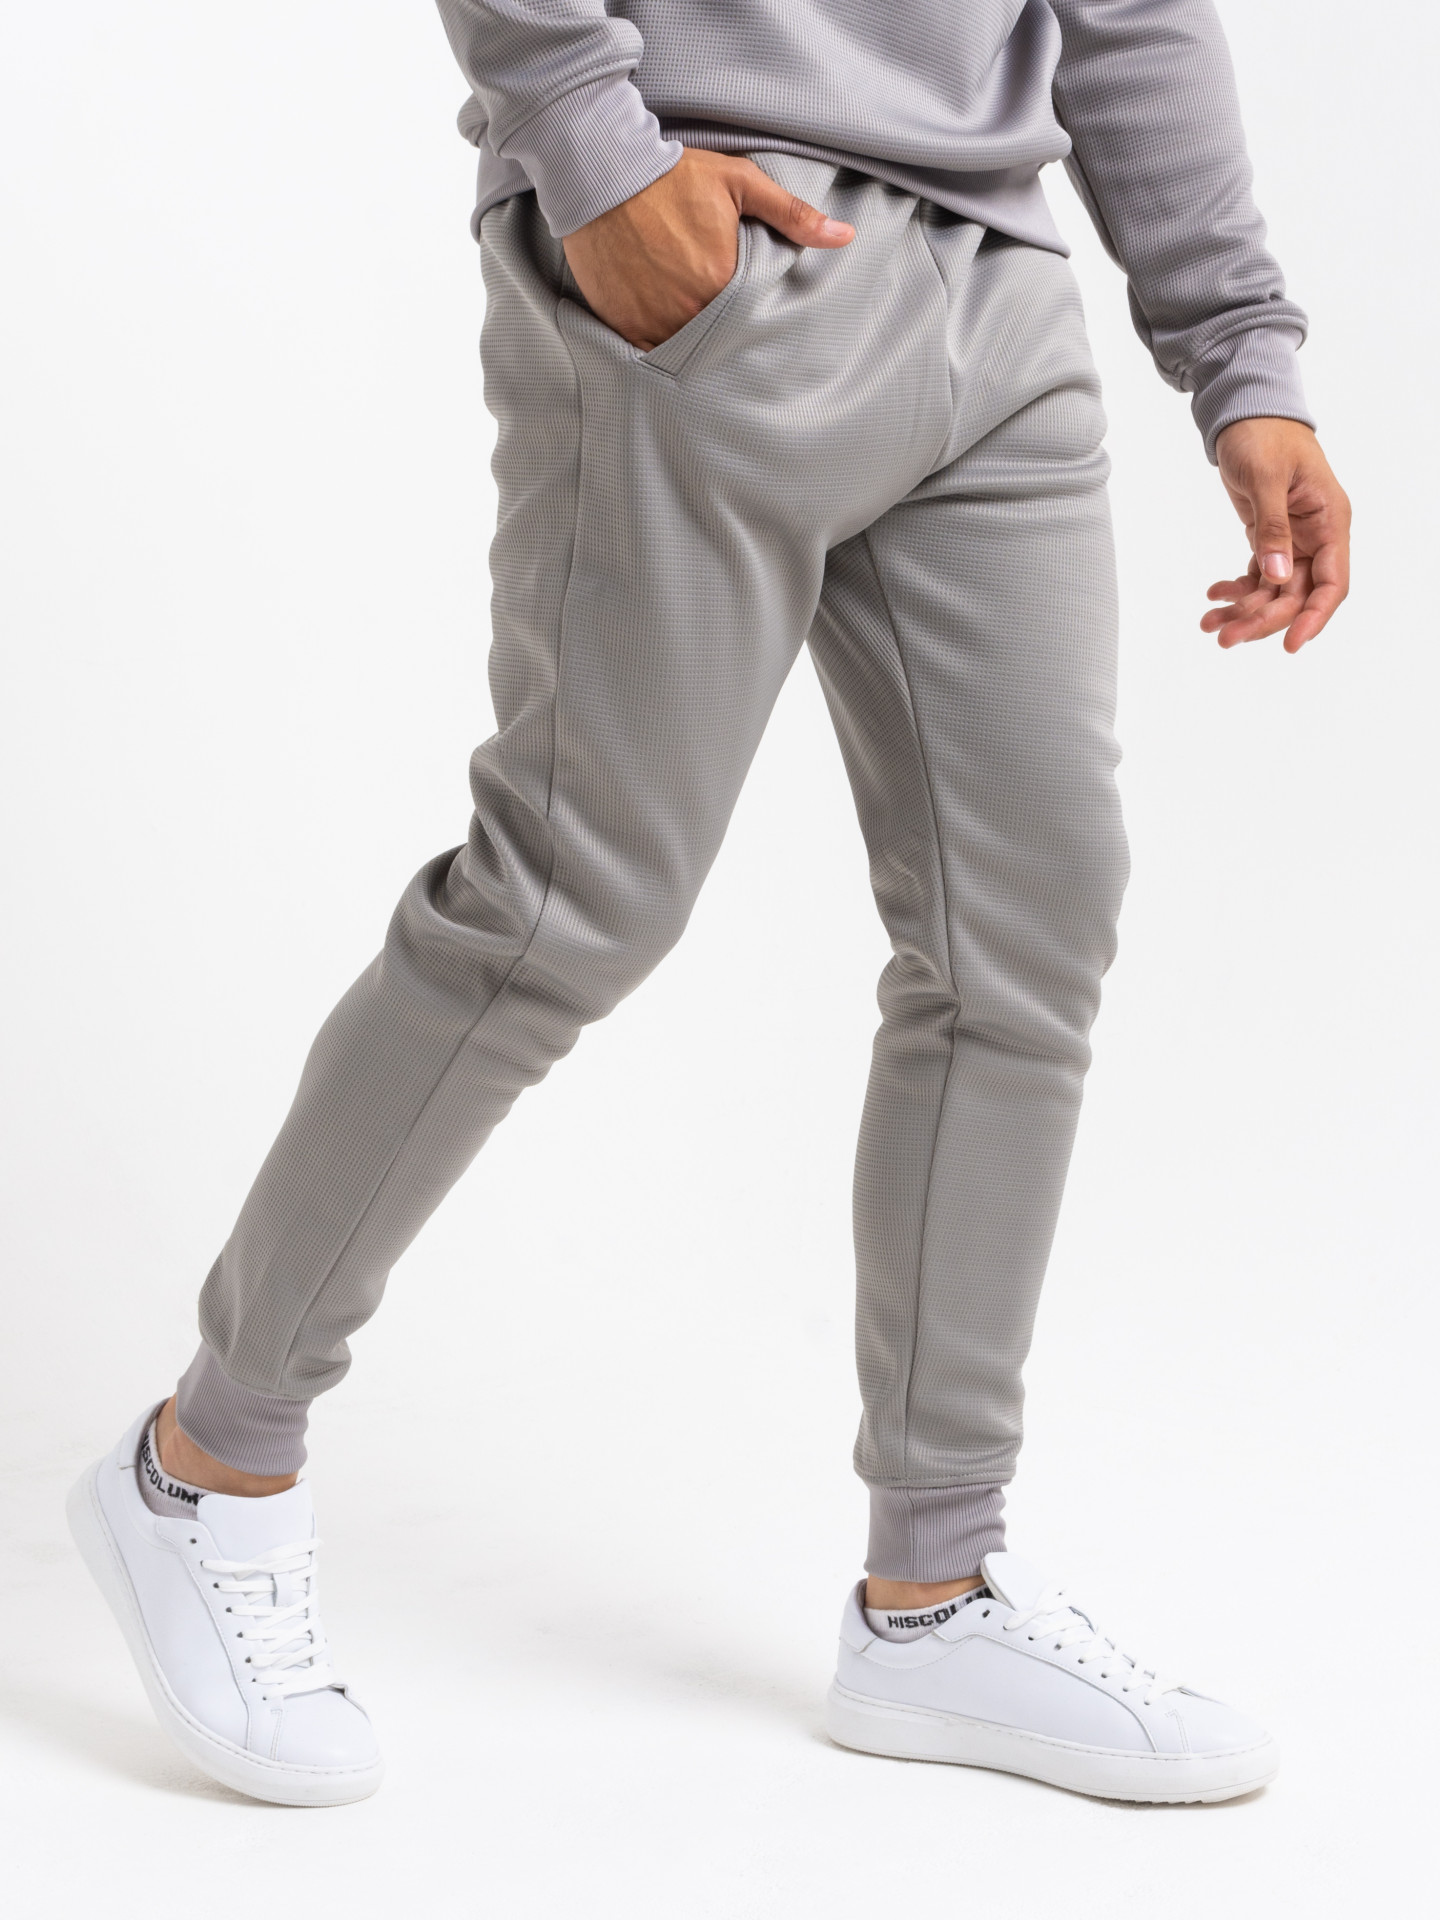 Ecrins Premium Velour Lining Tracksuit in Grey | Men's Clothing ...